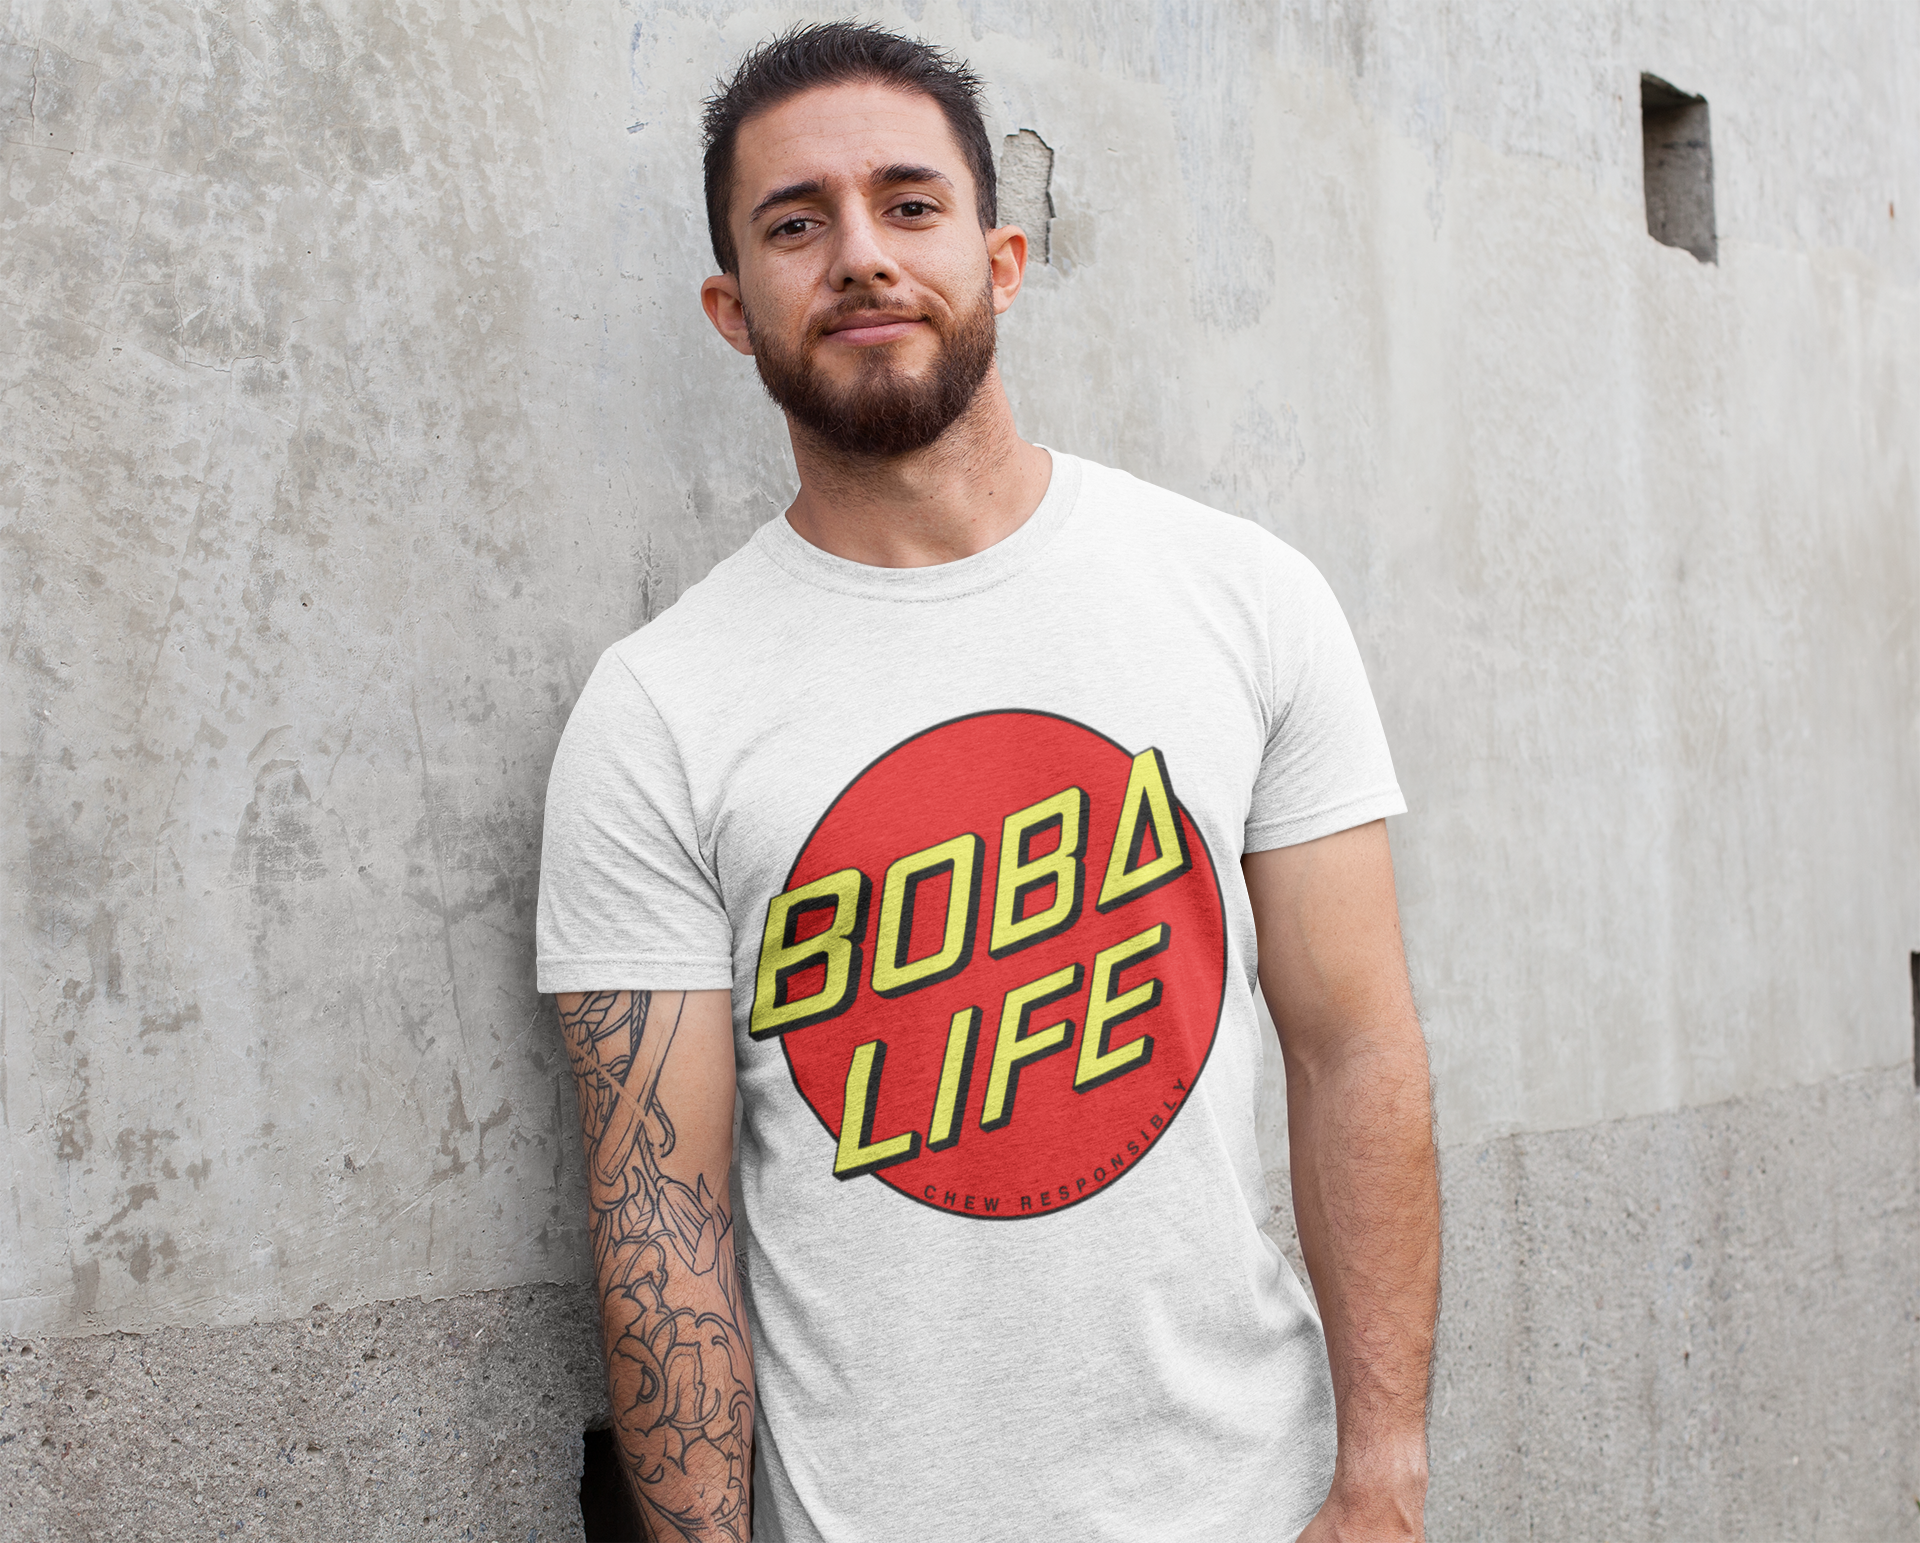 Man wearing a Boba Life T-Shirt against a wall